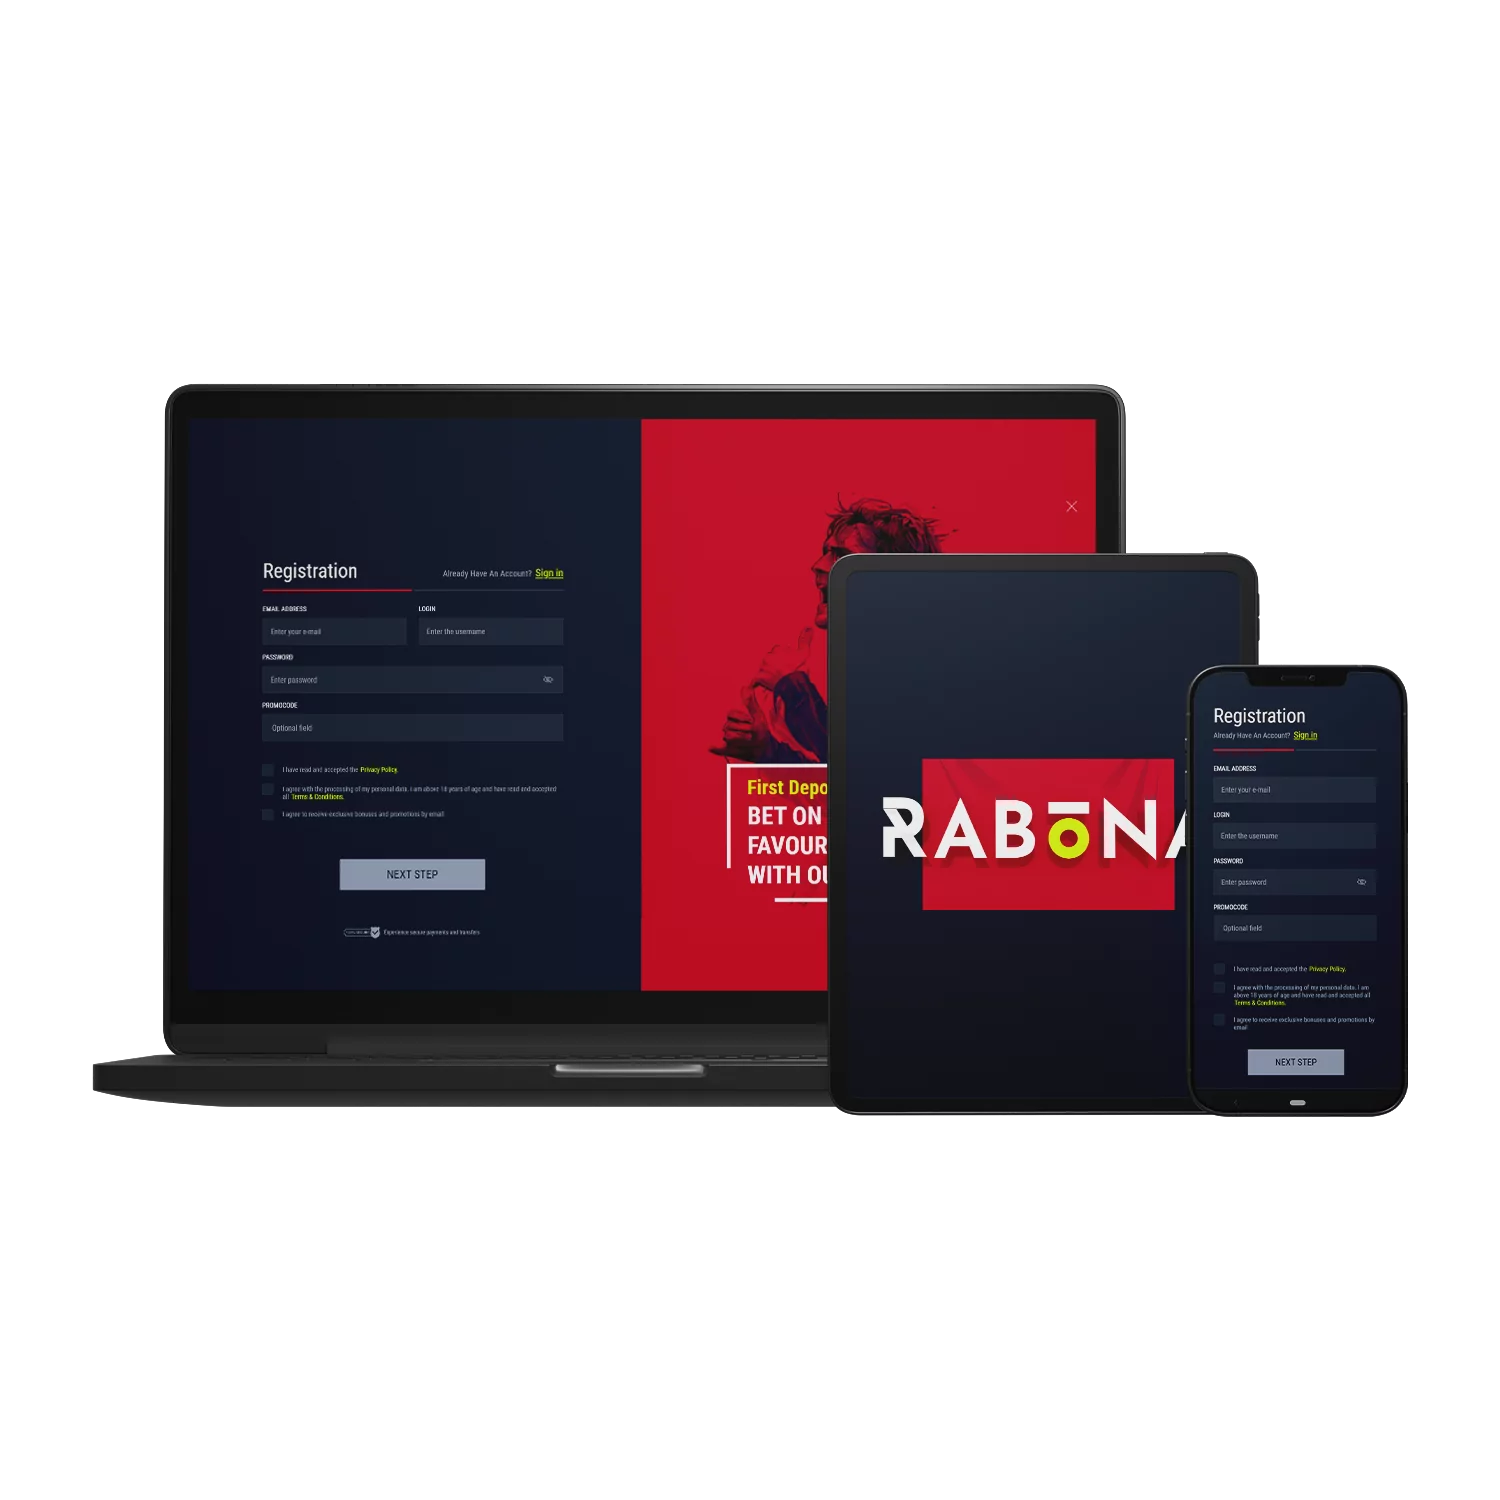 Learn how to create a new account on Rabona.